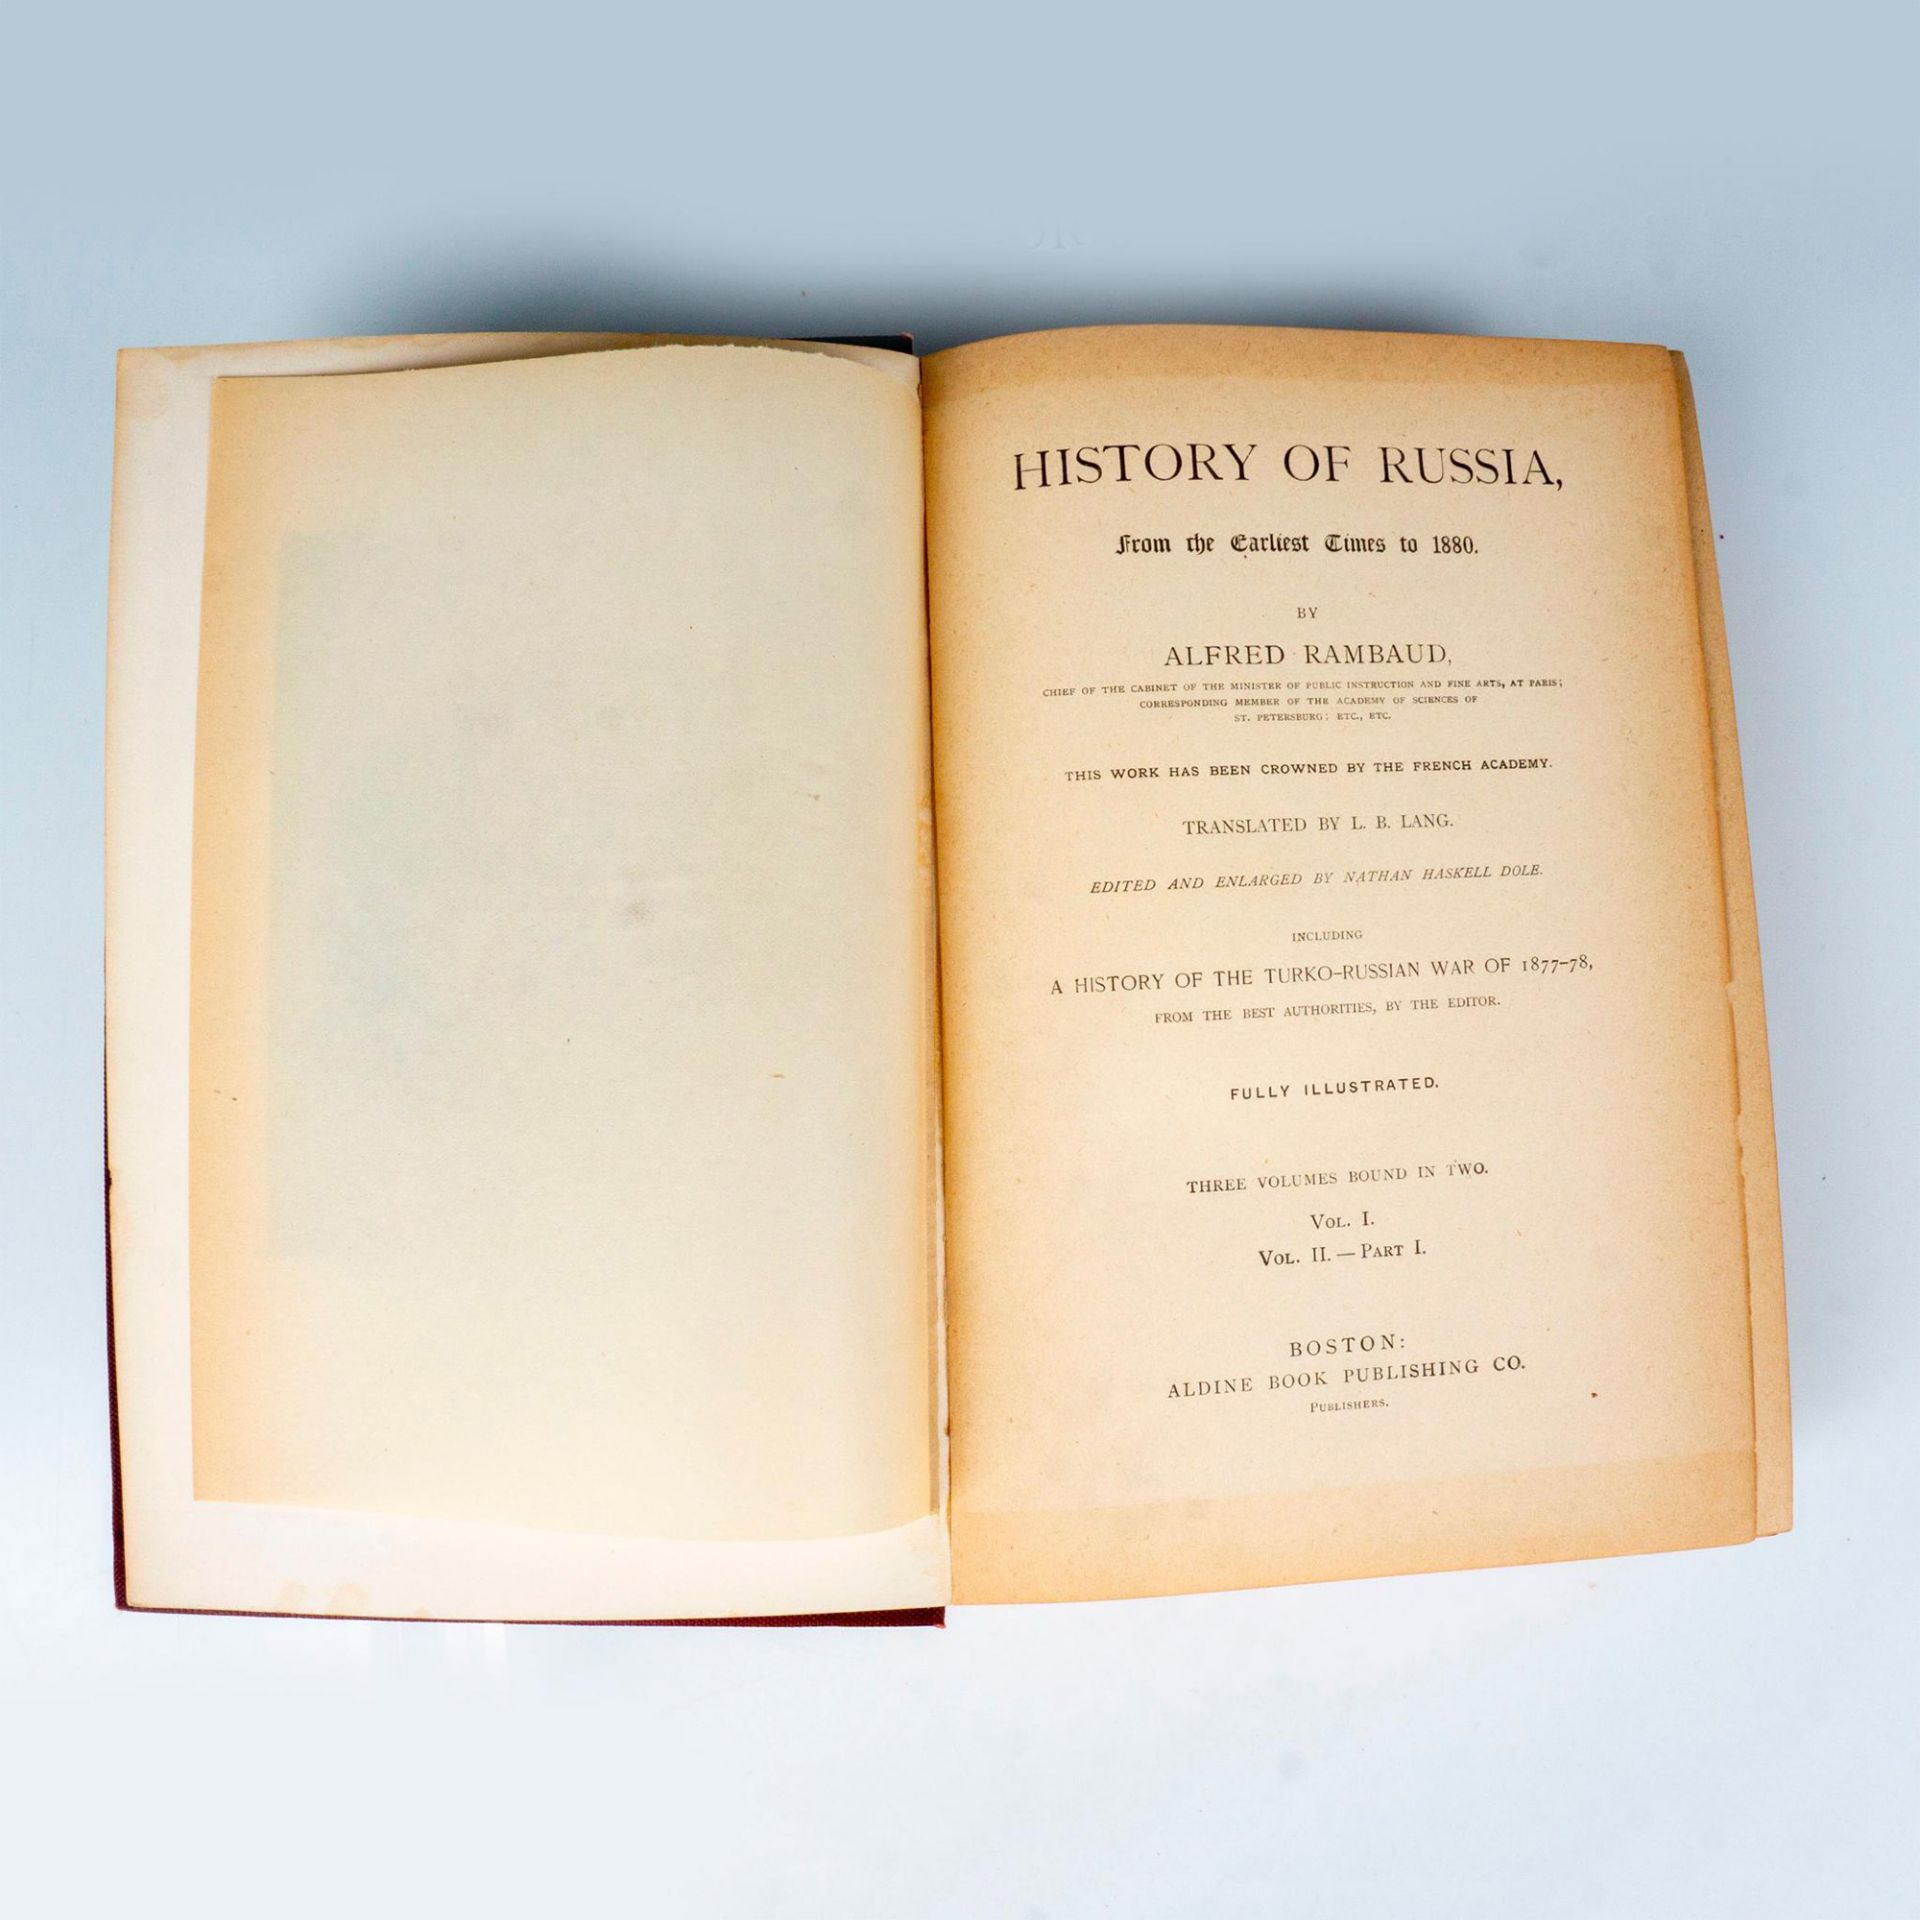 Rambaud's History of Russia Book, Volume 1-2 - Image 4 of 4